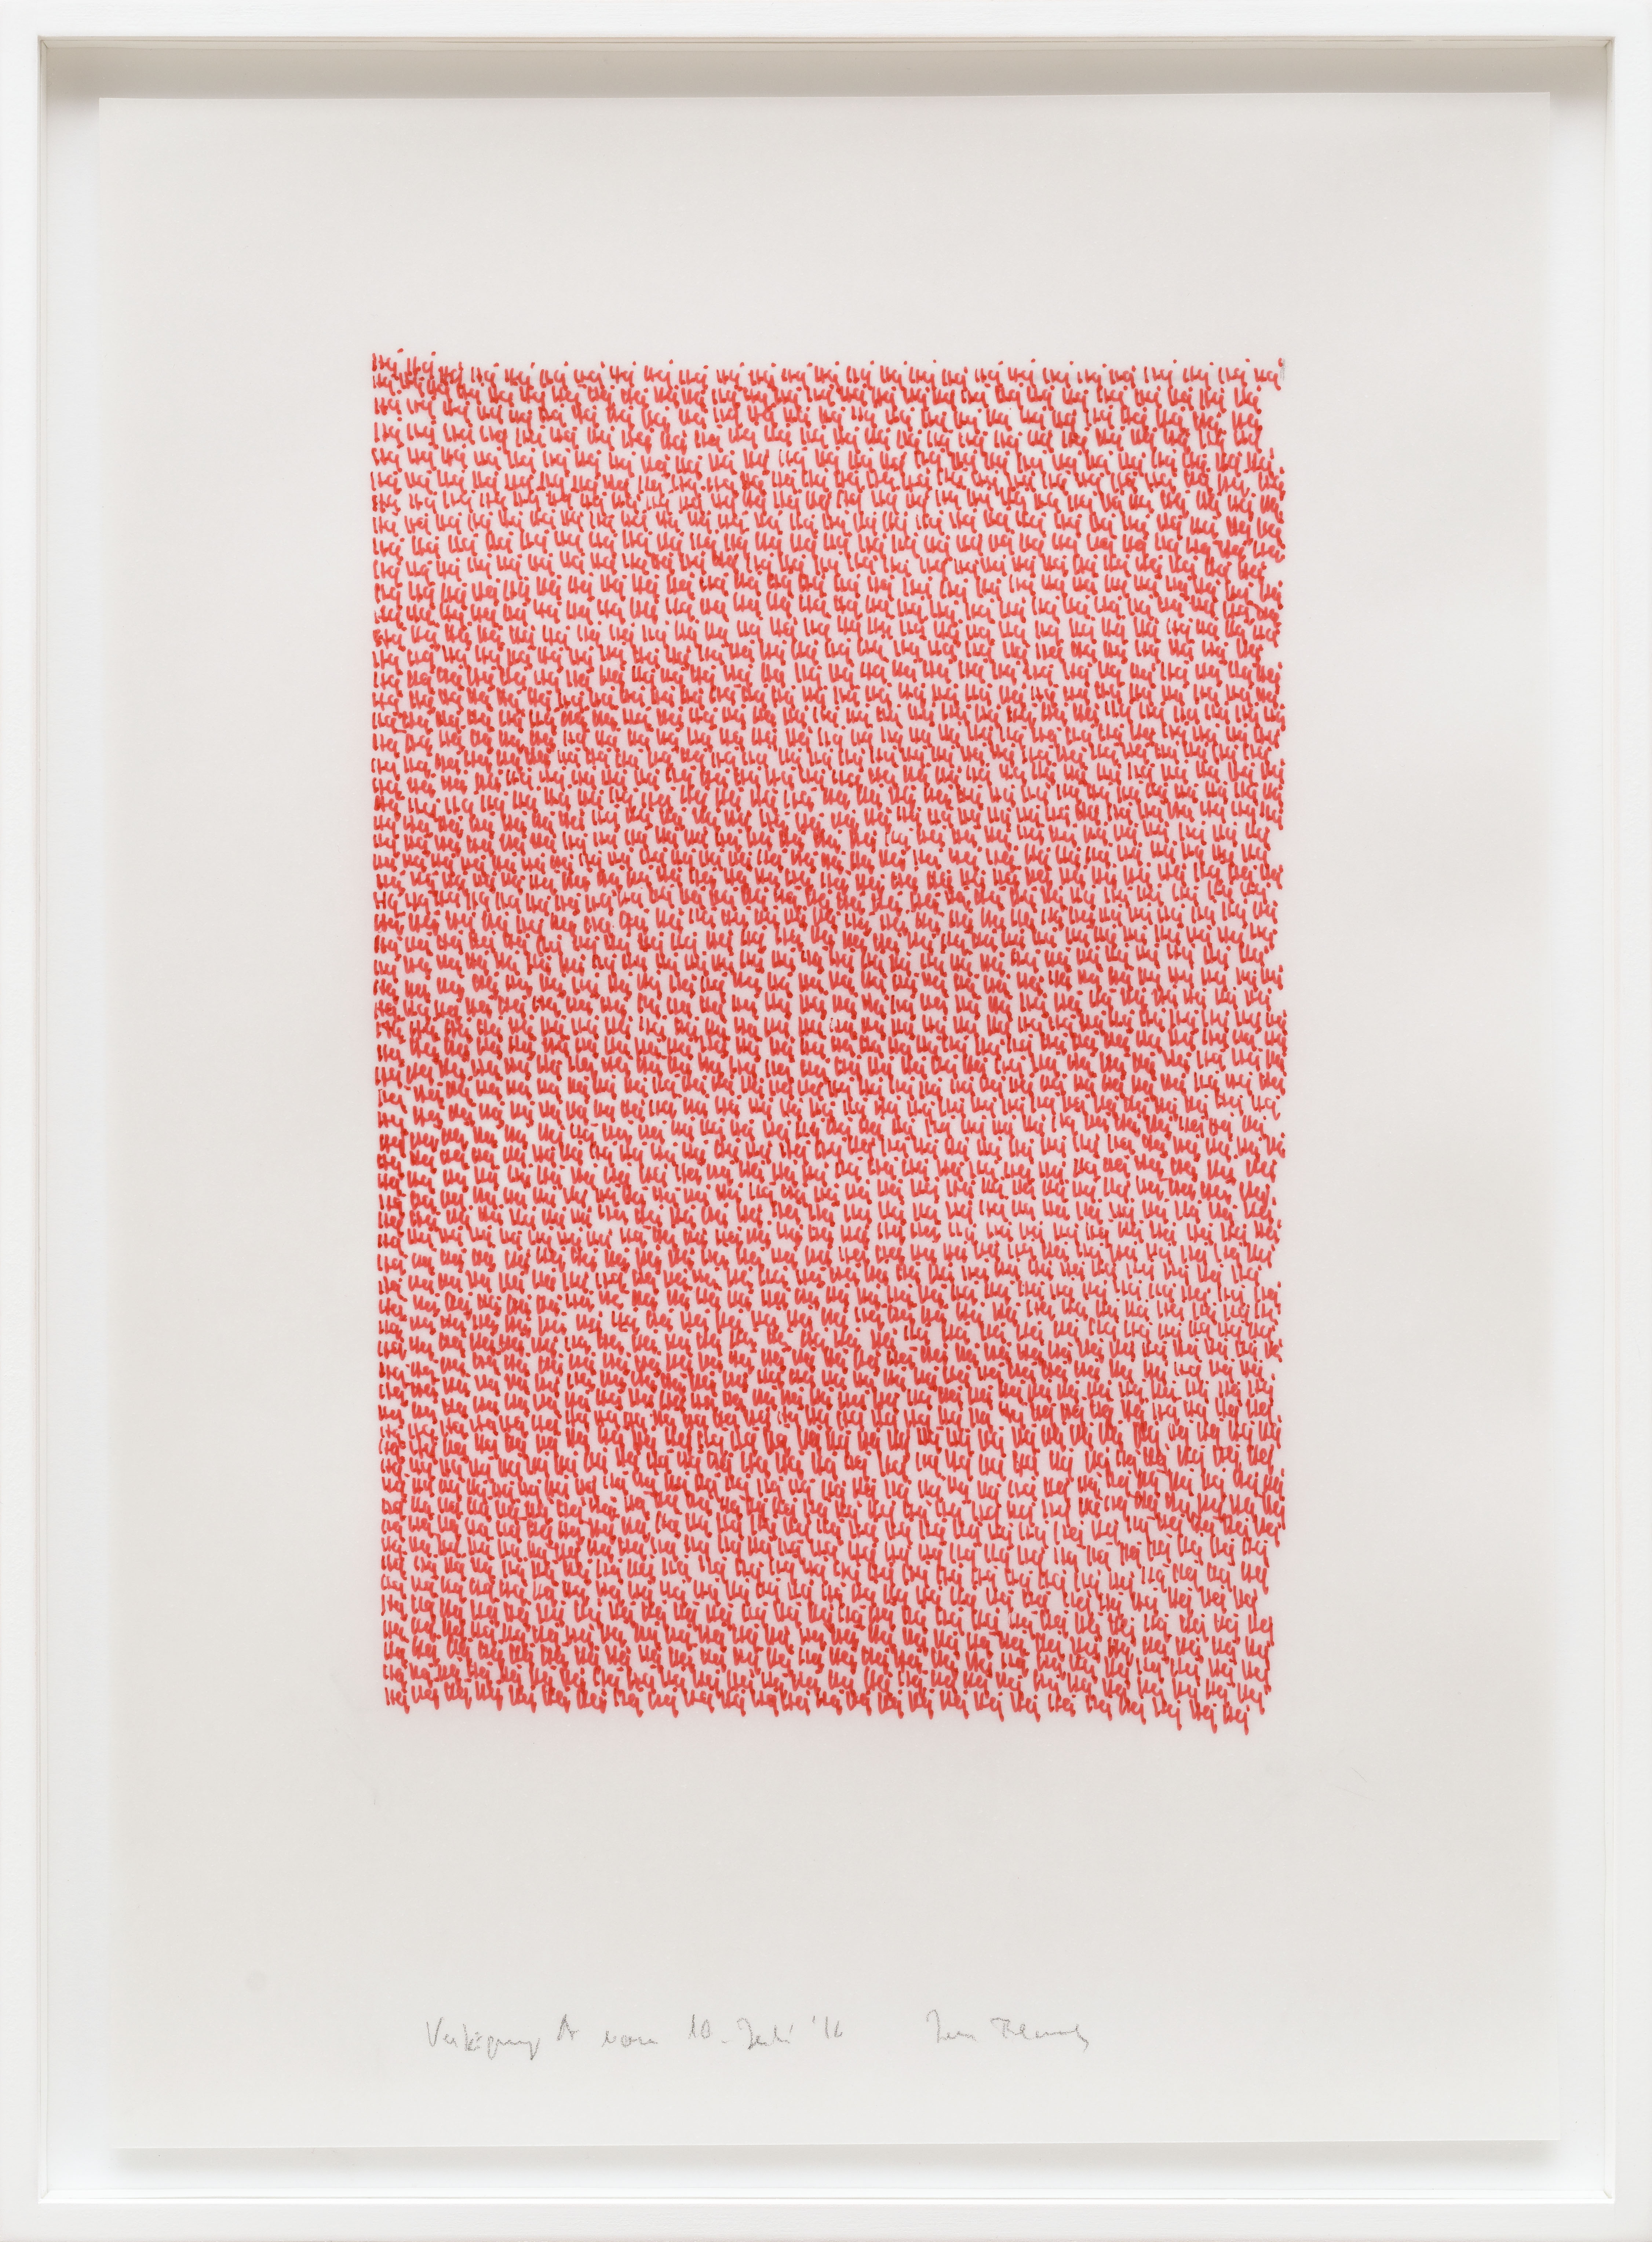 Global Writings, Verfügung A vom 10. Juli ’16, red marker on paper, 42 x 29.7 cm, 2016